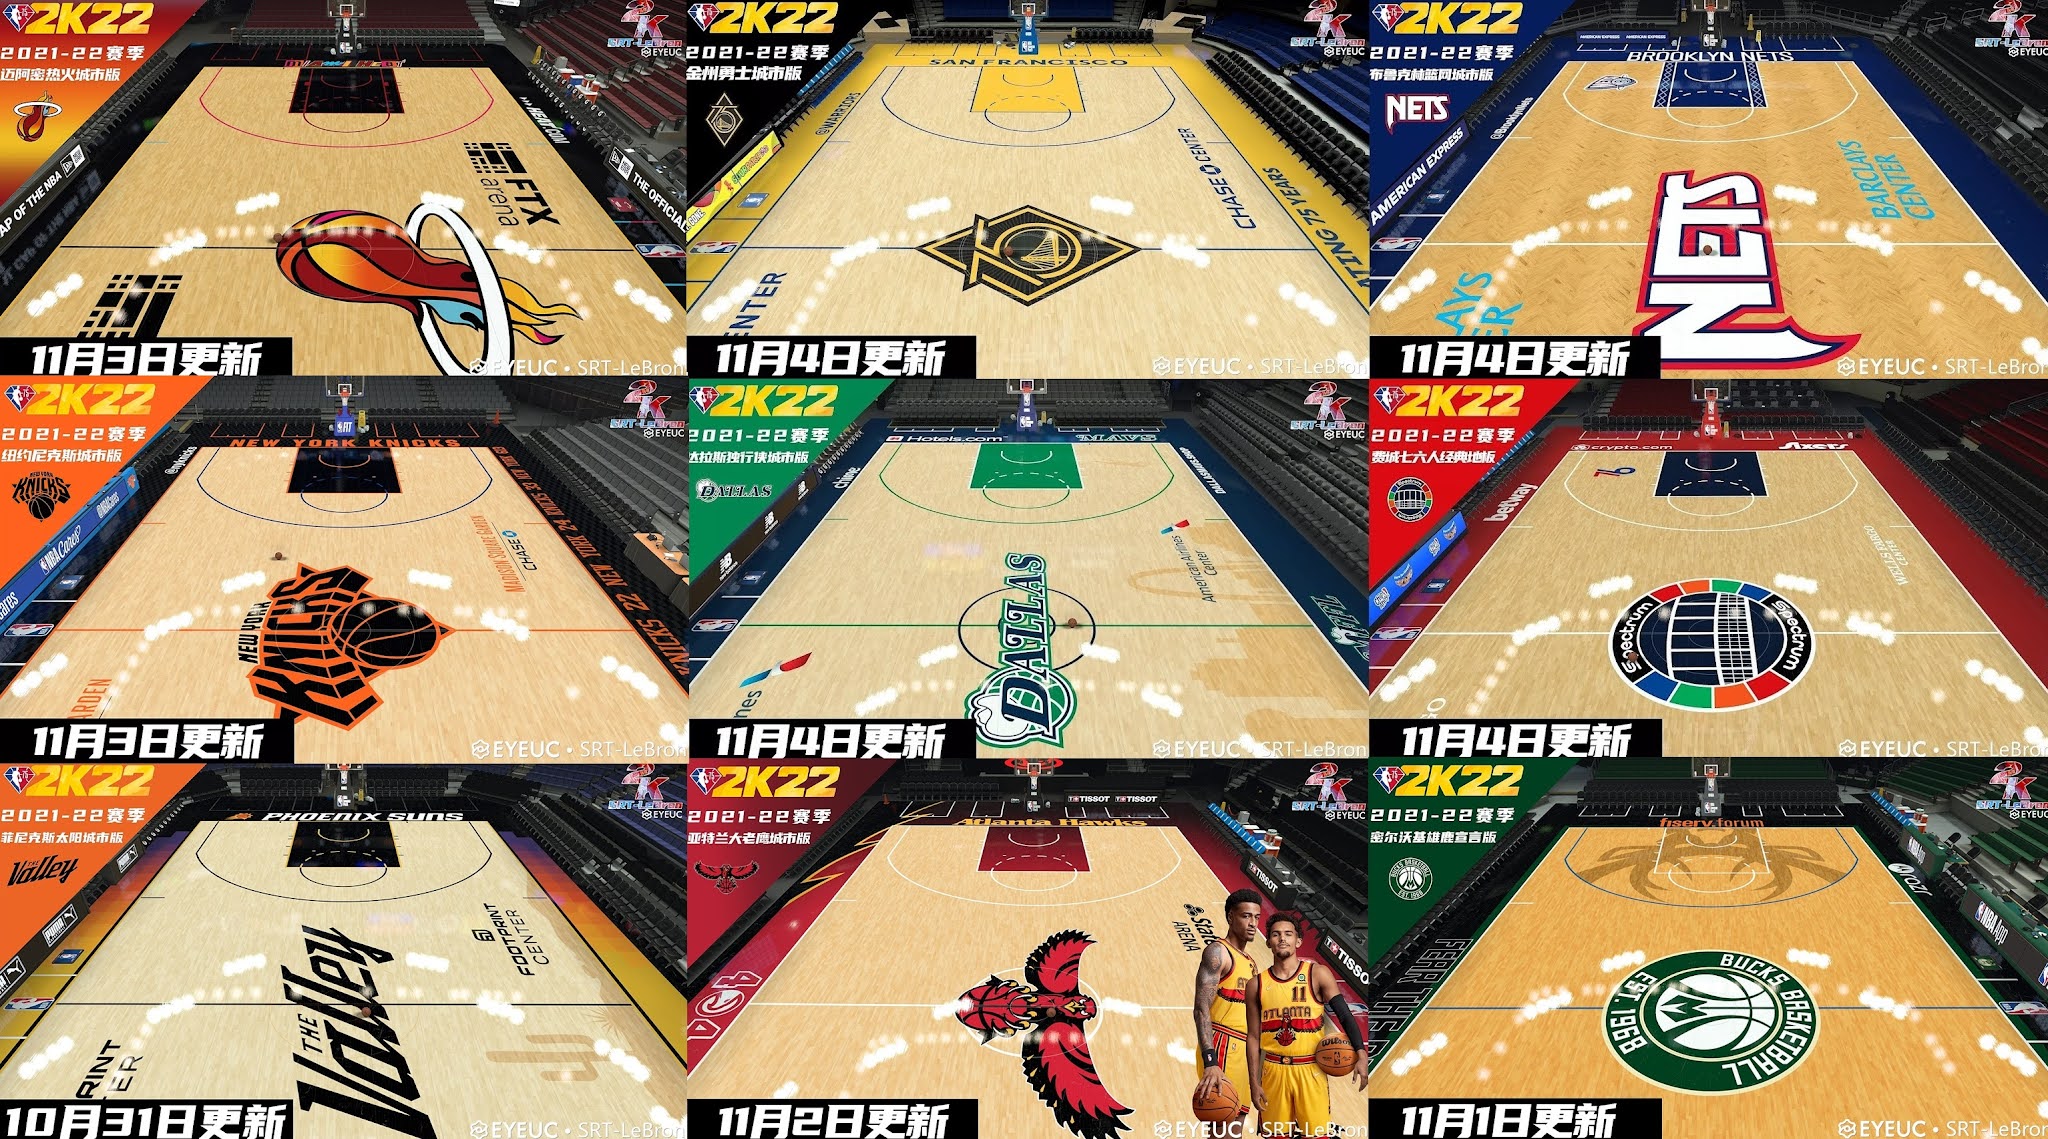 NBA 2K22 Charlotte Hornets All Nike City Jerseys Pack (2018, 2019,2021,2022)  by 2kspecialist